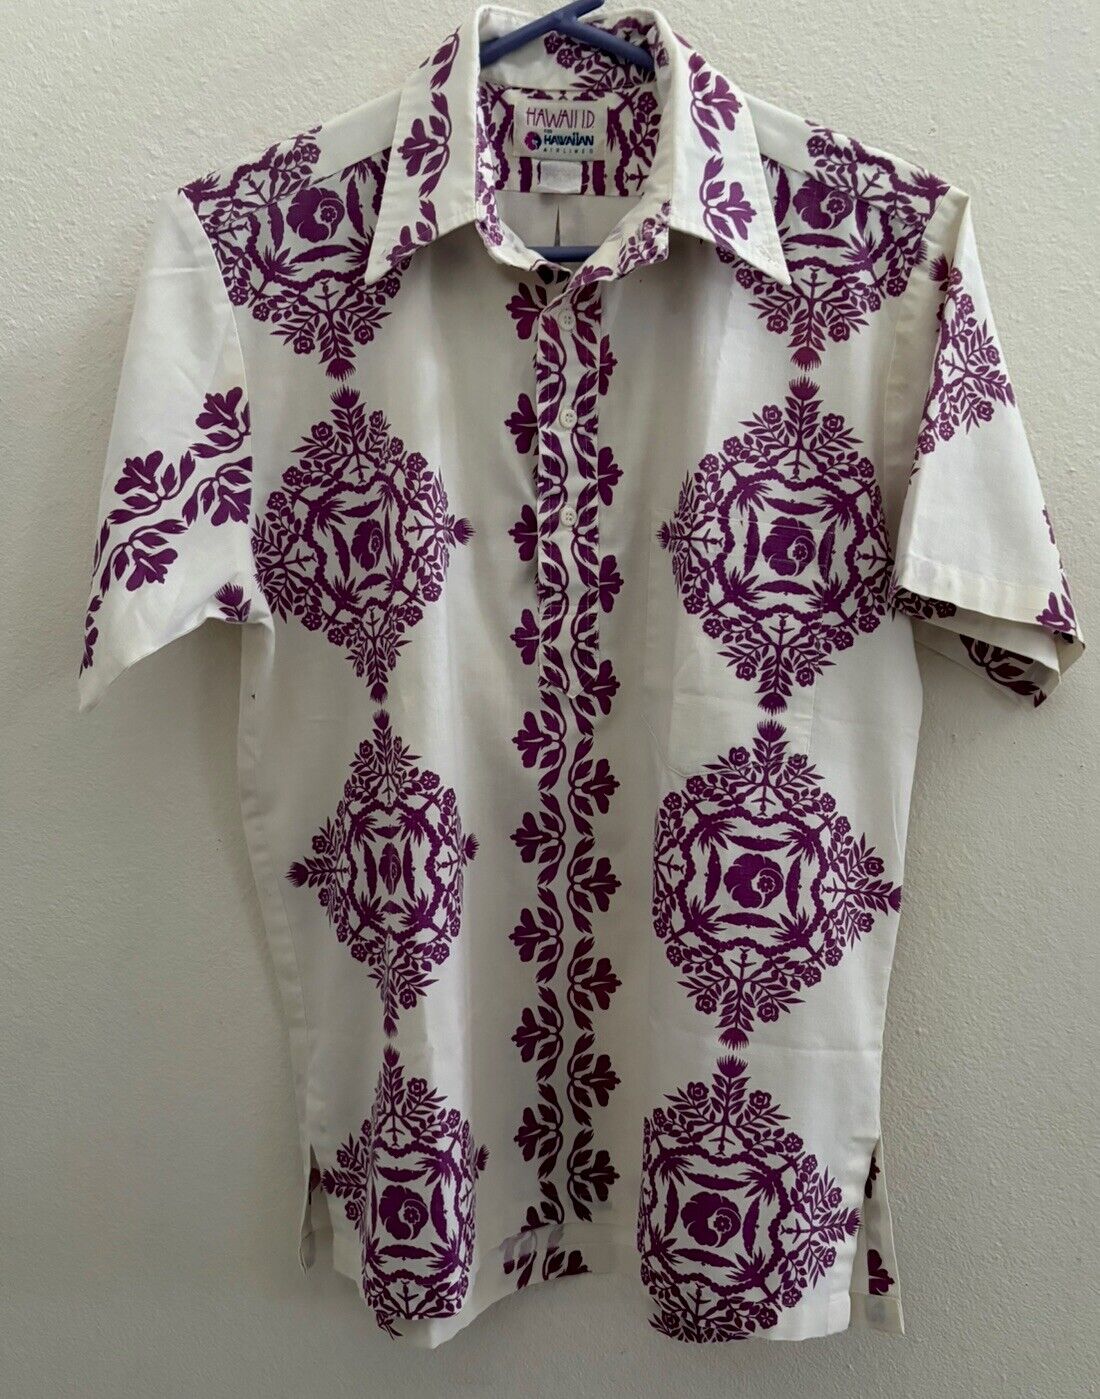 Vintage Hawaiian Airlines Uniform Aloha Shirt, Men’s Medium.